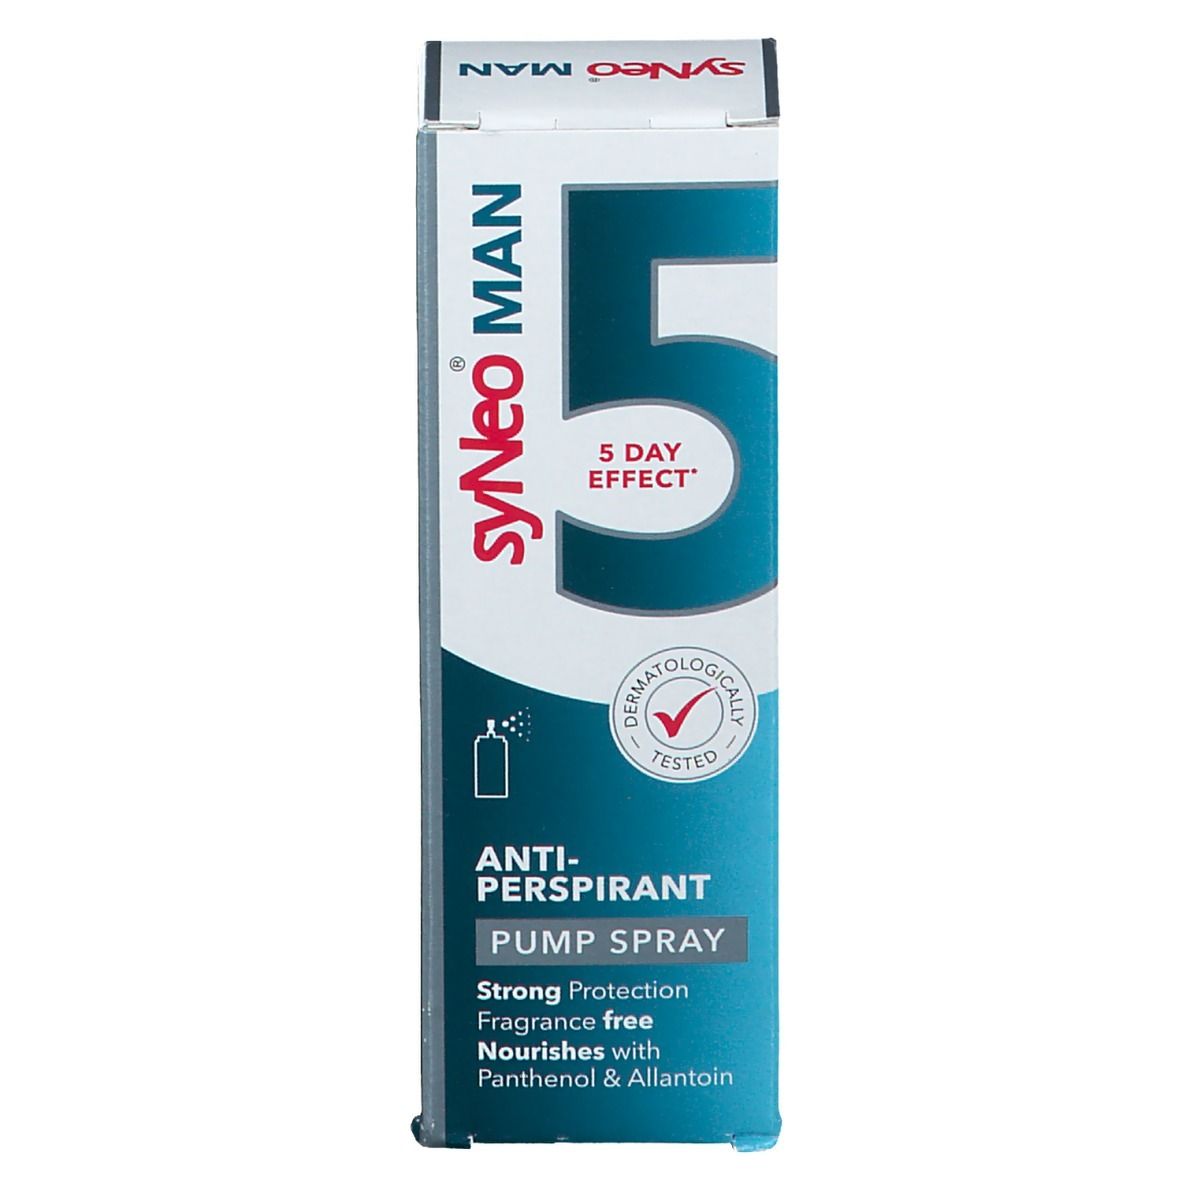 syNeo®5 MAN Deo-Antitranspirant